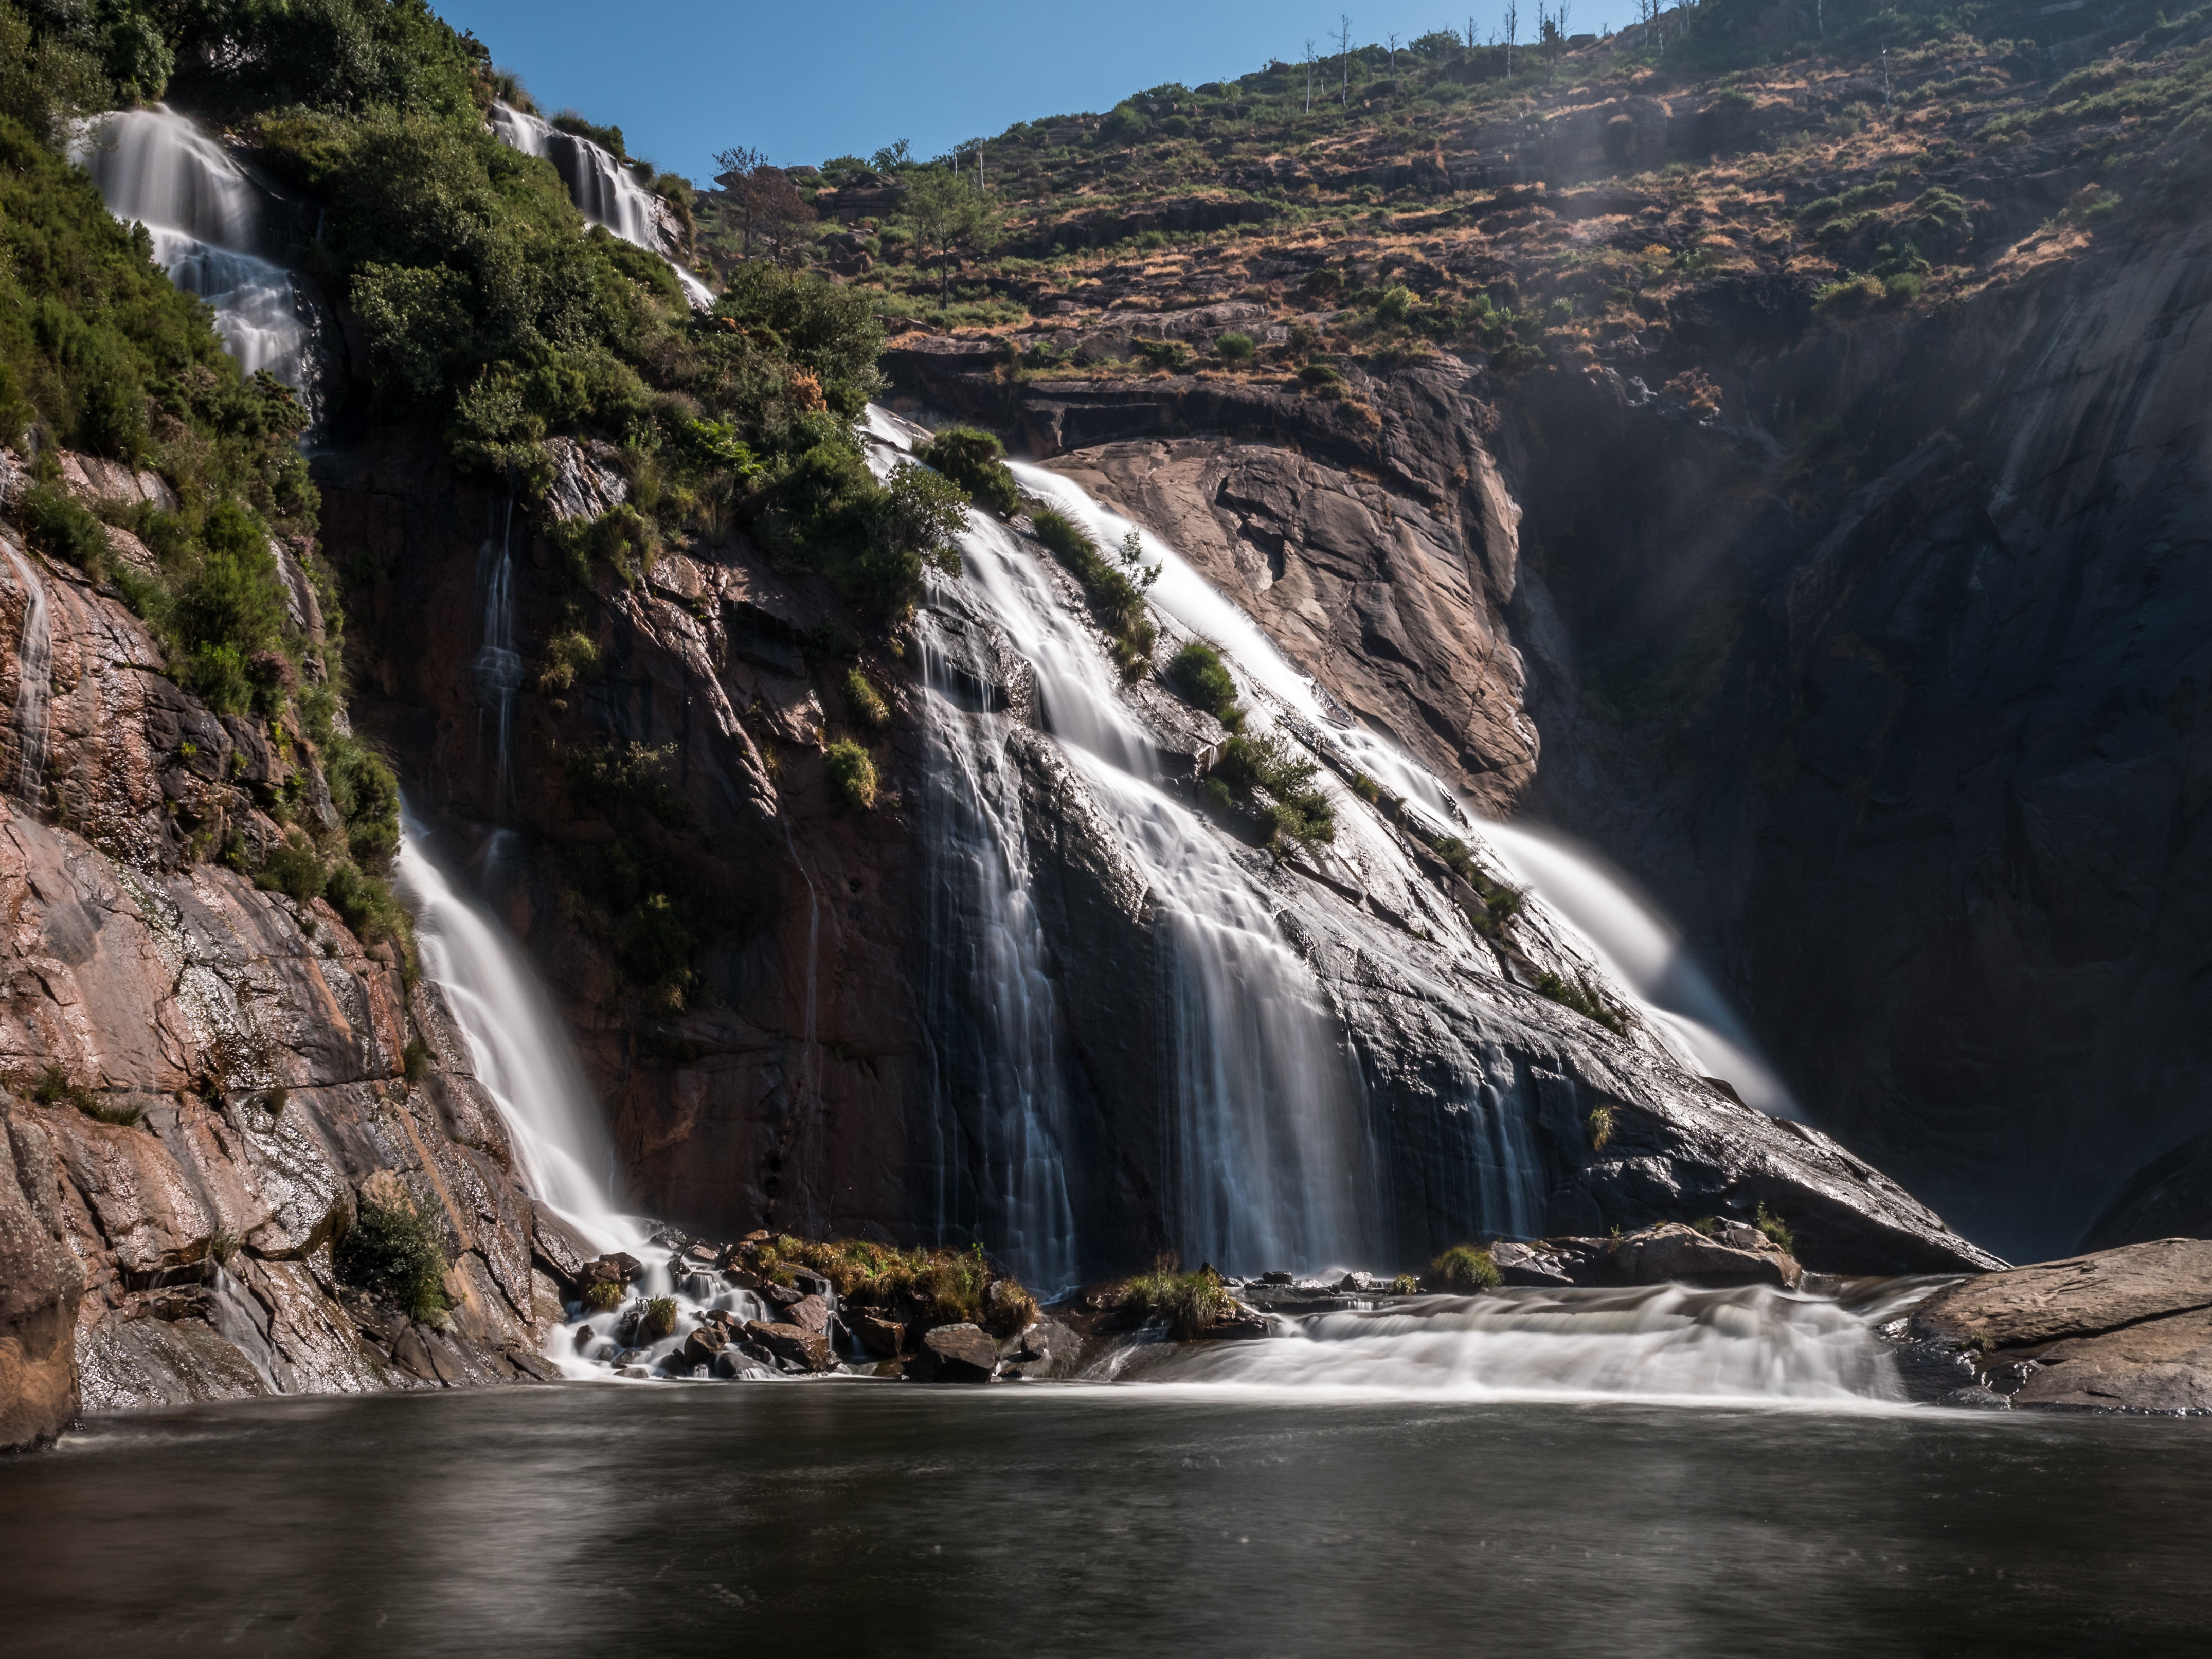 Cascada del Ézaro - Wikipedia, la enciclopedia libre